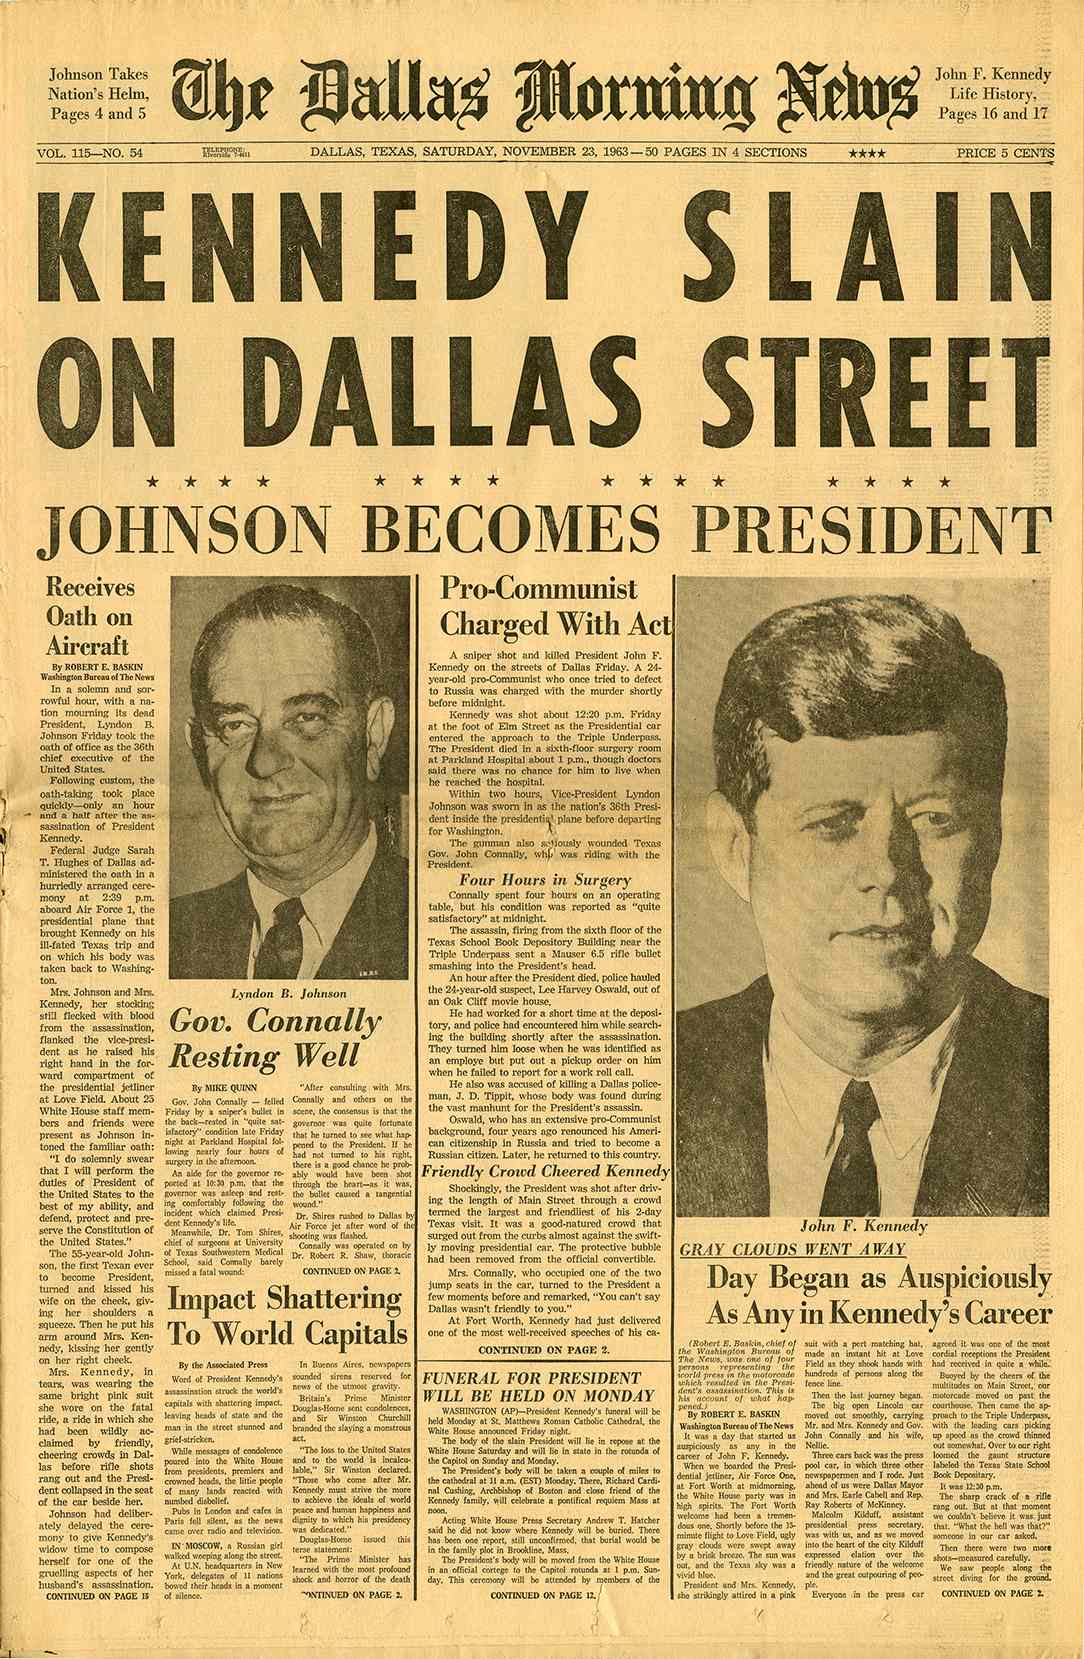 "Kennedy Slain on Dallas Street" - The Dallas Morning News November 23, 1963 Edition